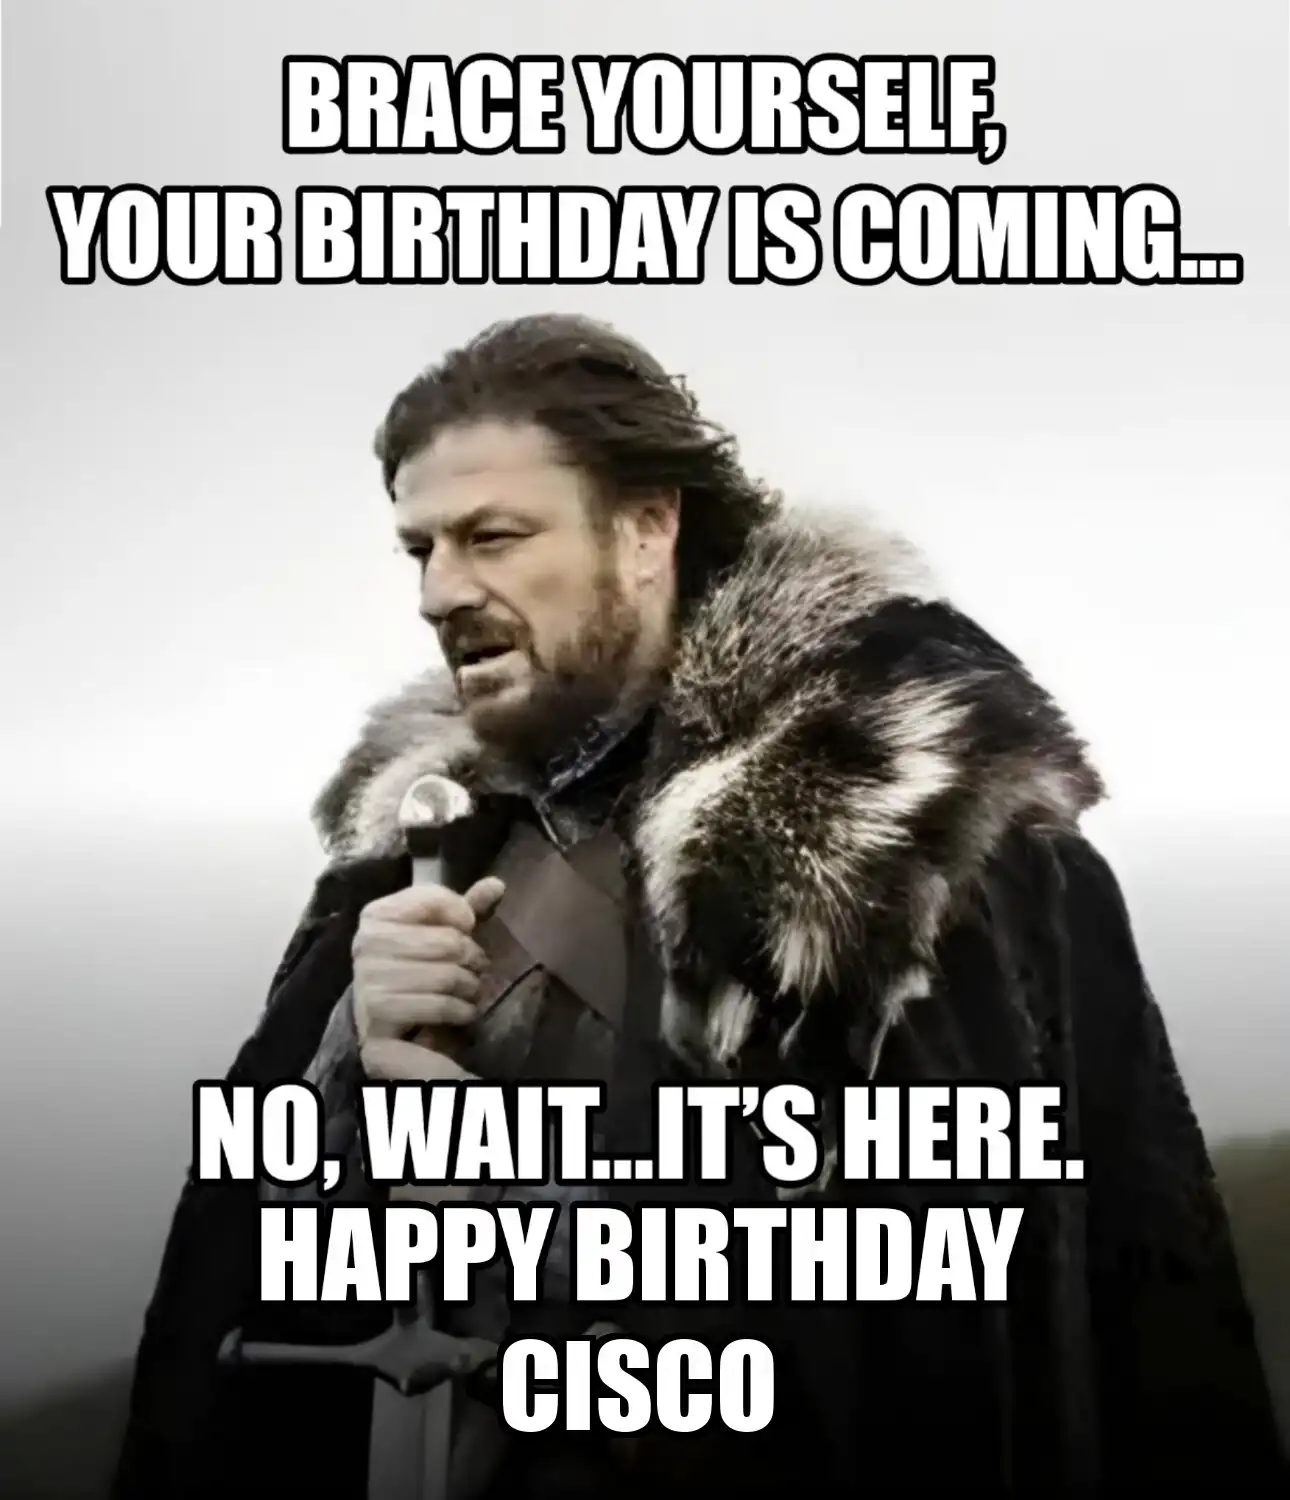 Happy Birthday Cisco Brace Yourself Your Birthday Is Coming Meme